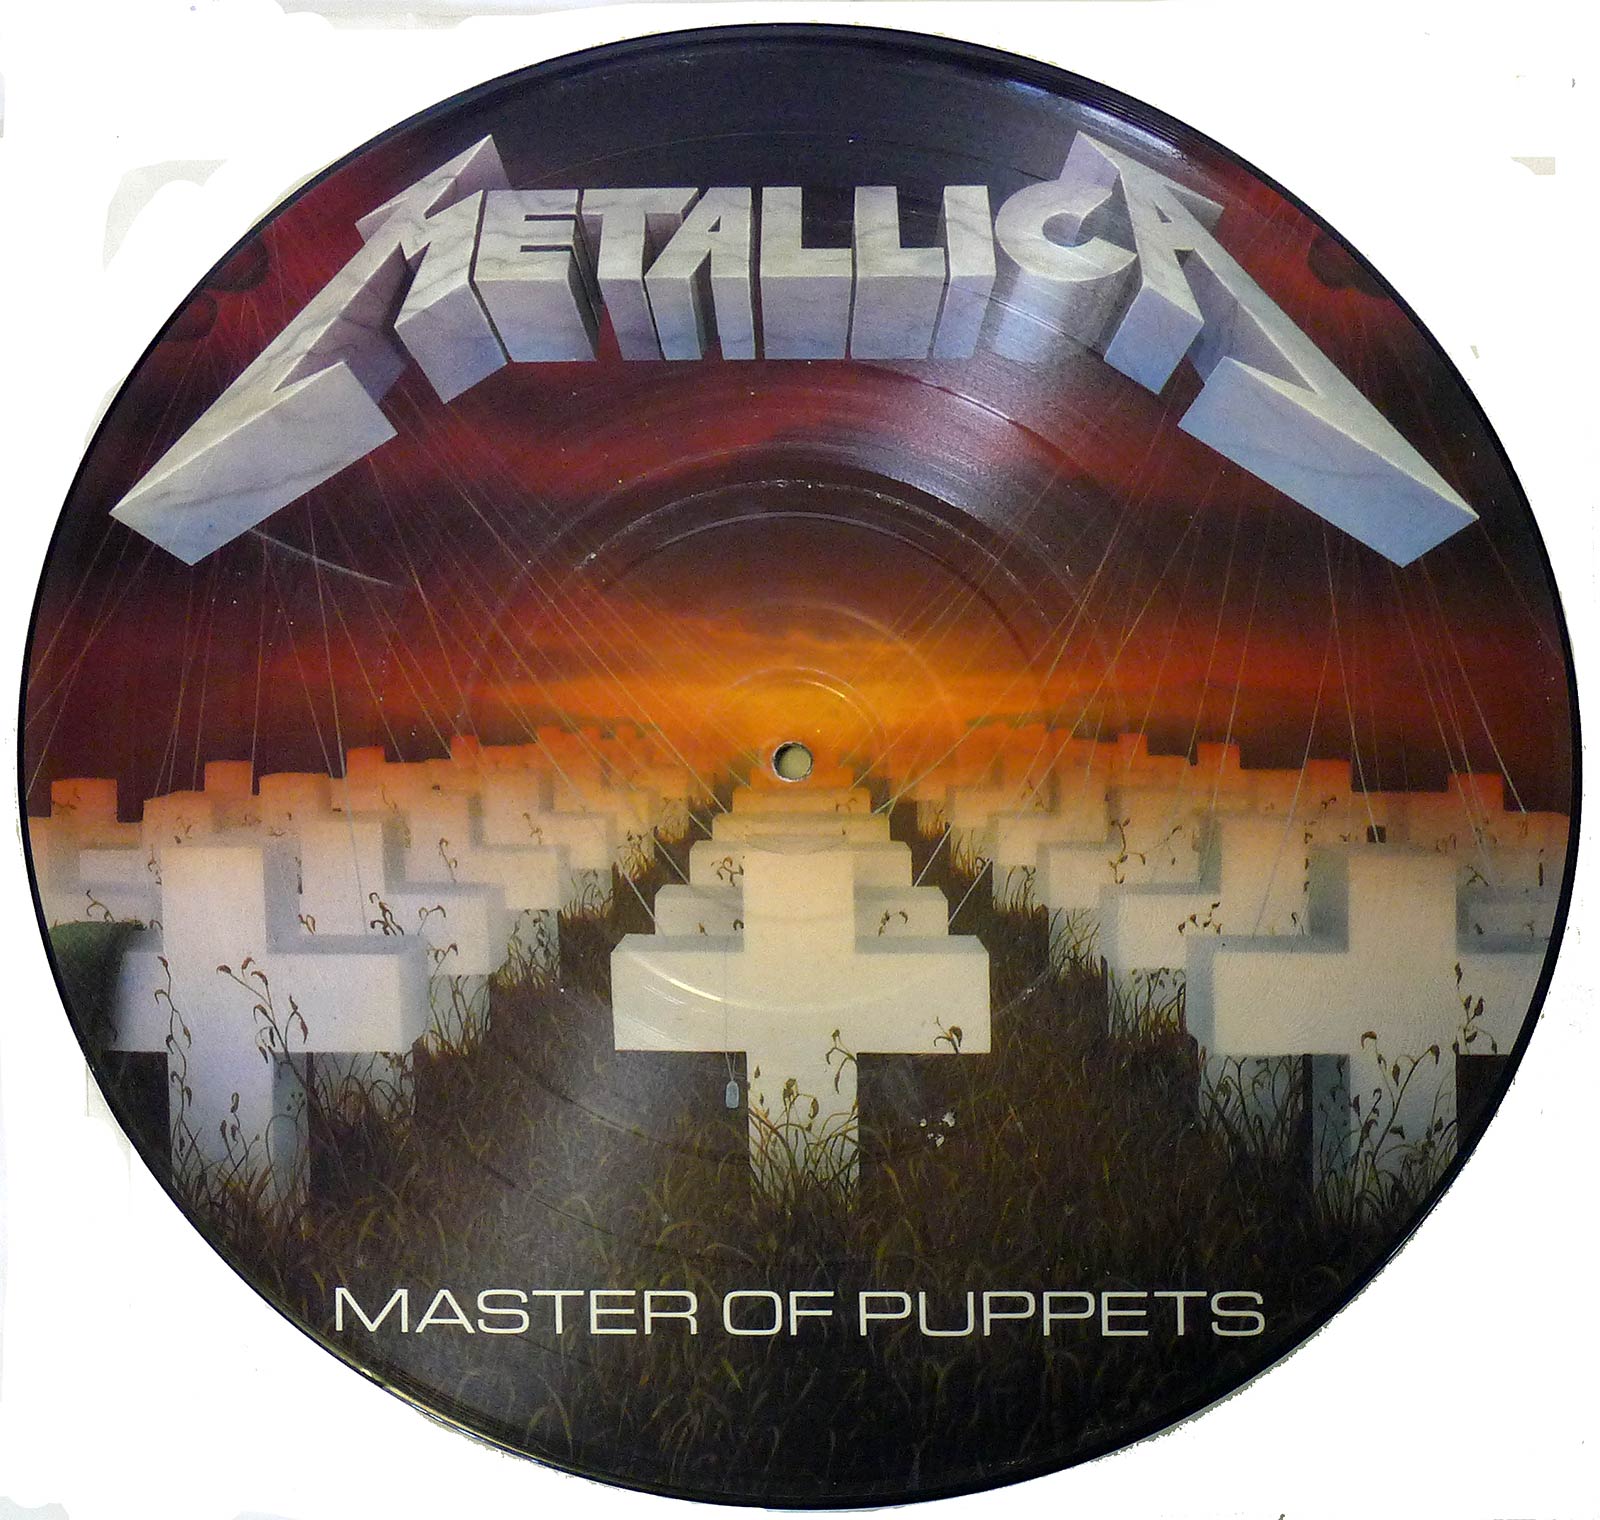 Metallica - Master of Puppets - Red Vinyl LP